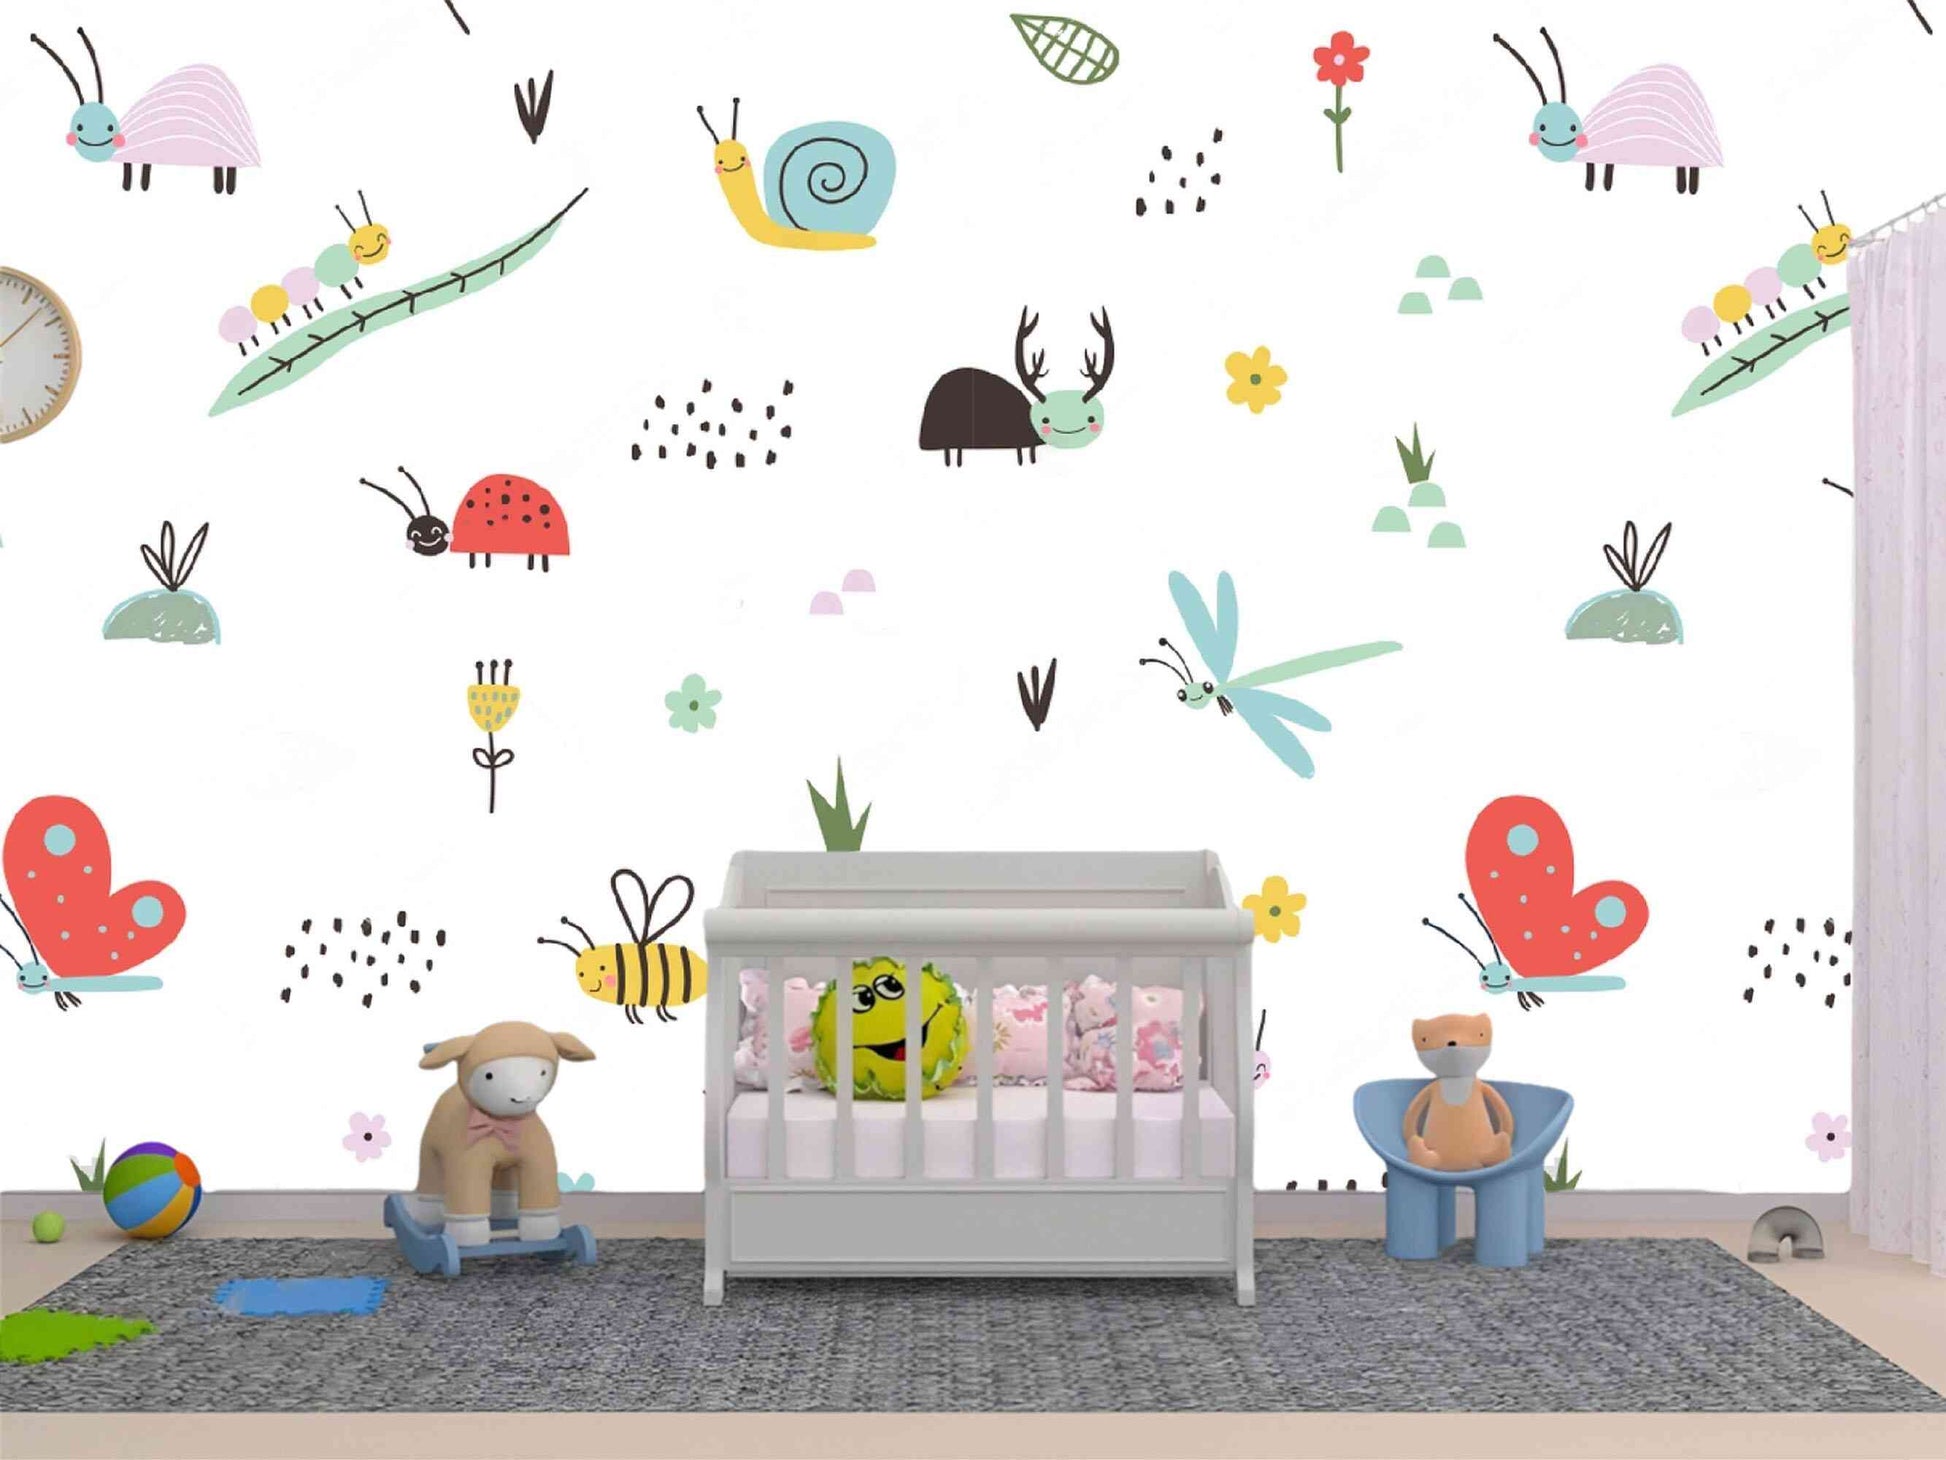 Whimsical bug wallpaper - delightful illustrations for a playful nursery.